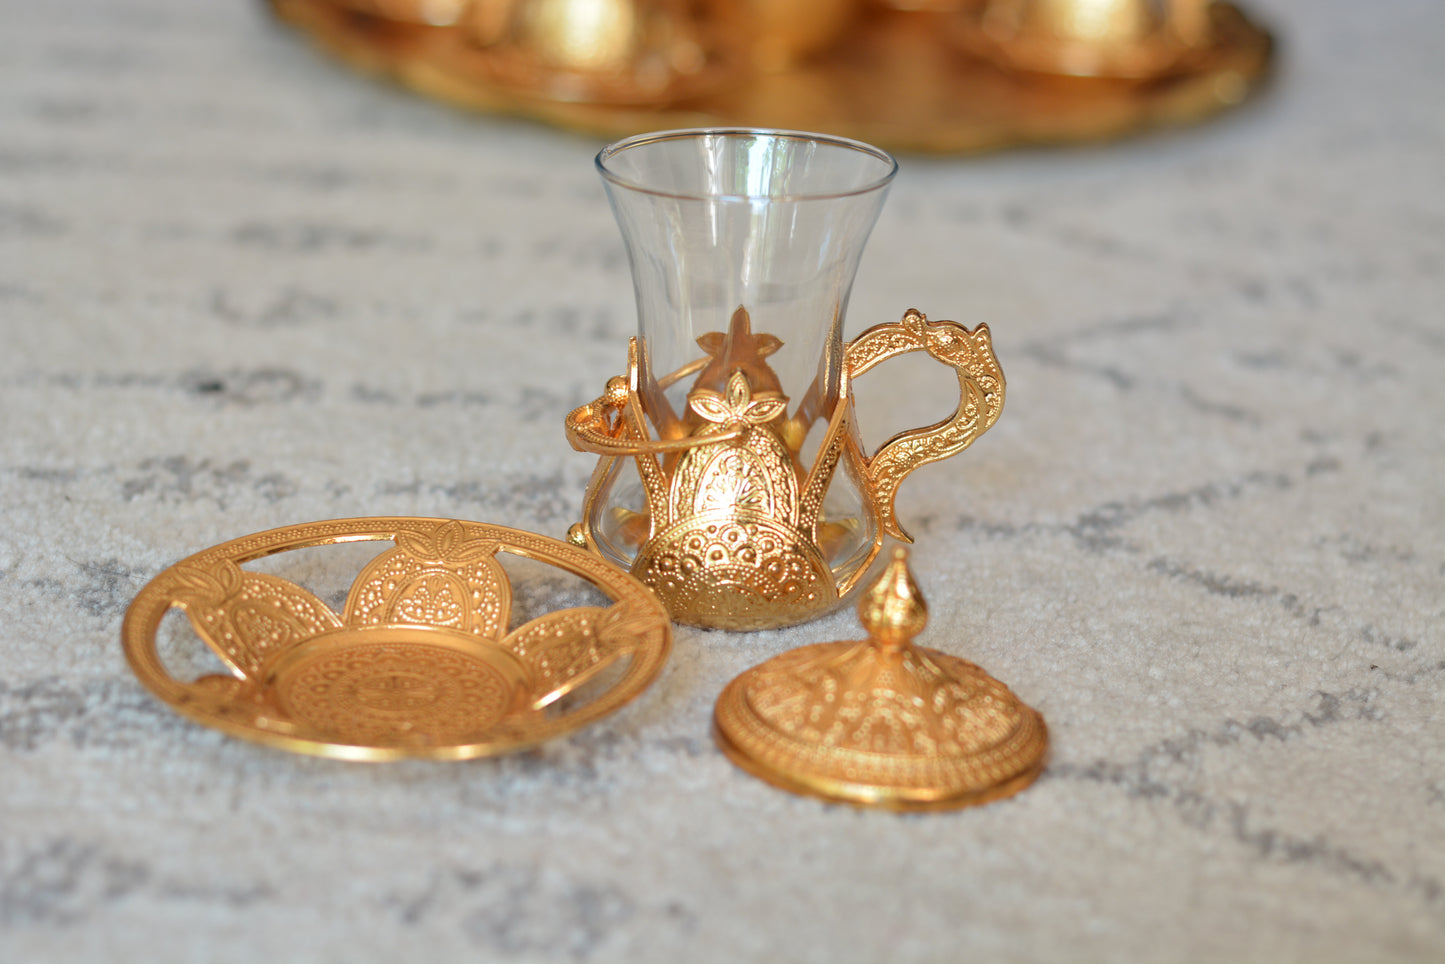 Gold Turkish Tea Cups with Ottoman Design- Serves 6